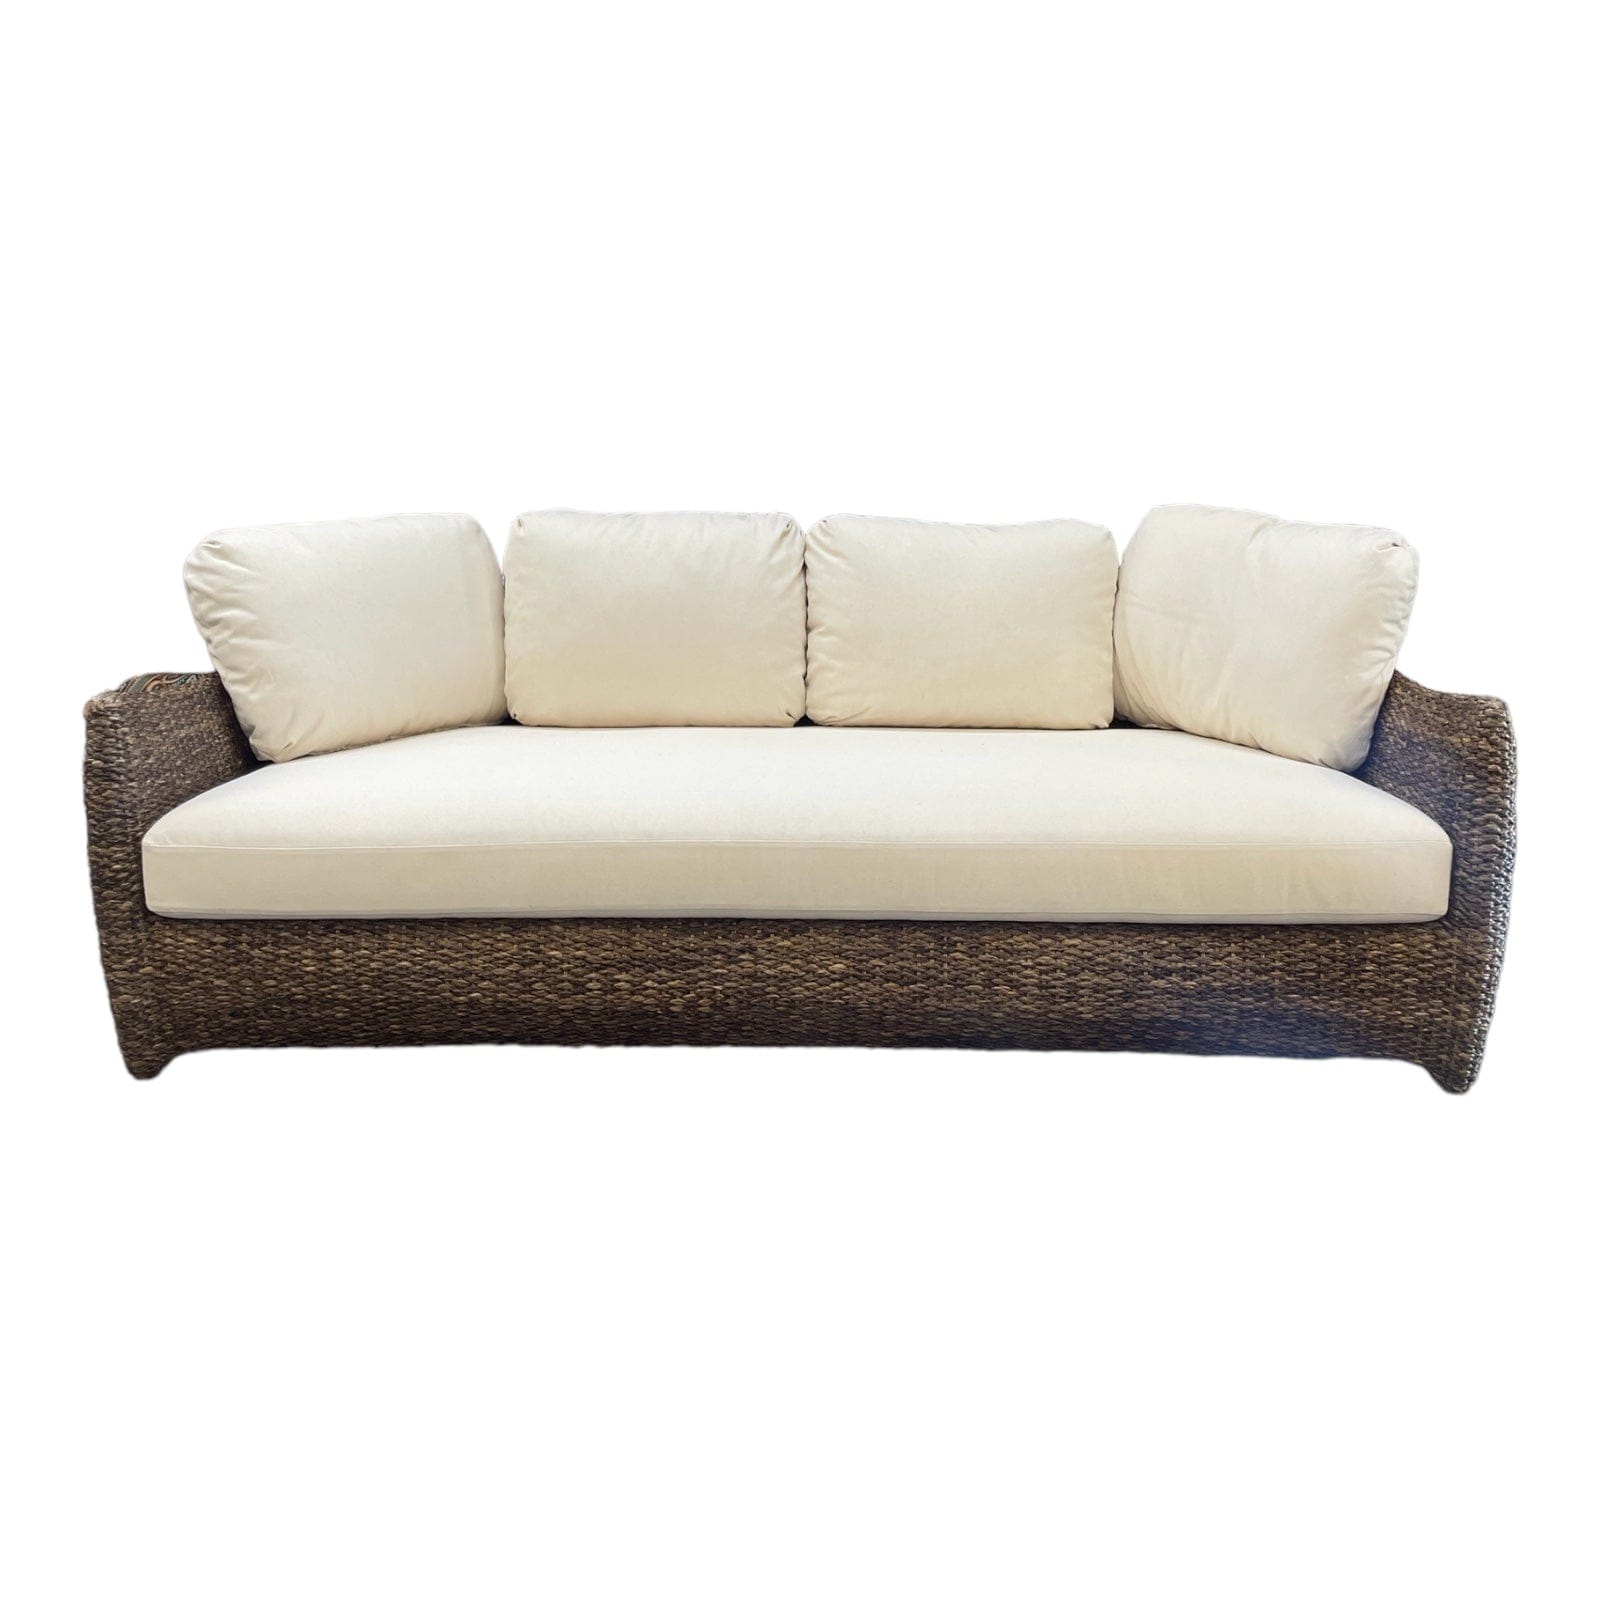 The Original Water Hyacinth Gula 3 Seater Sofa